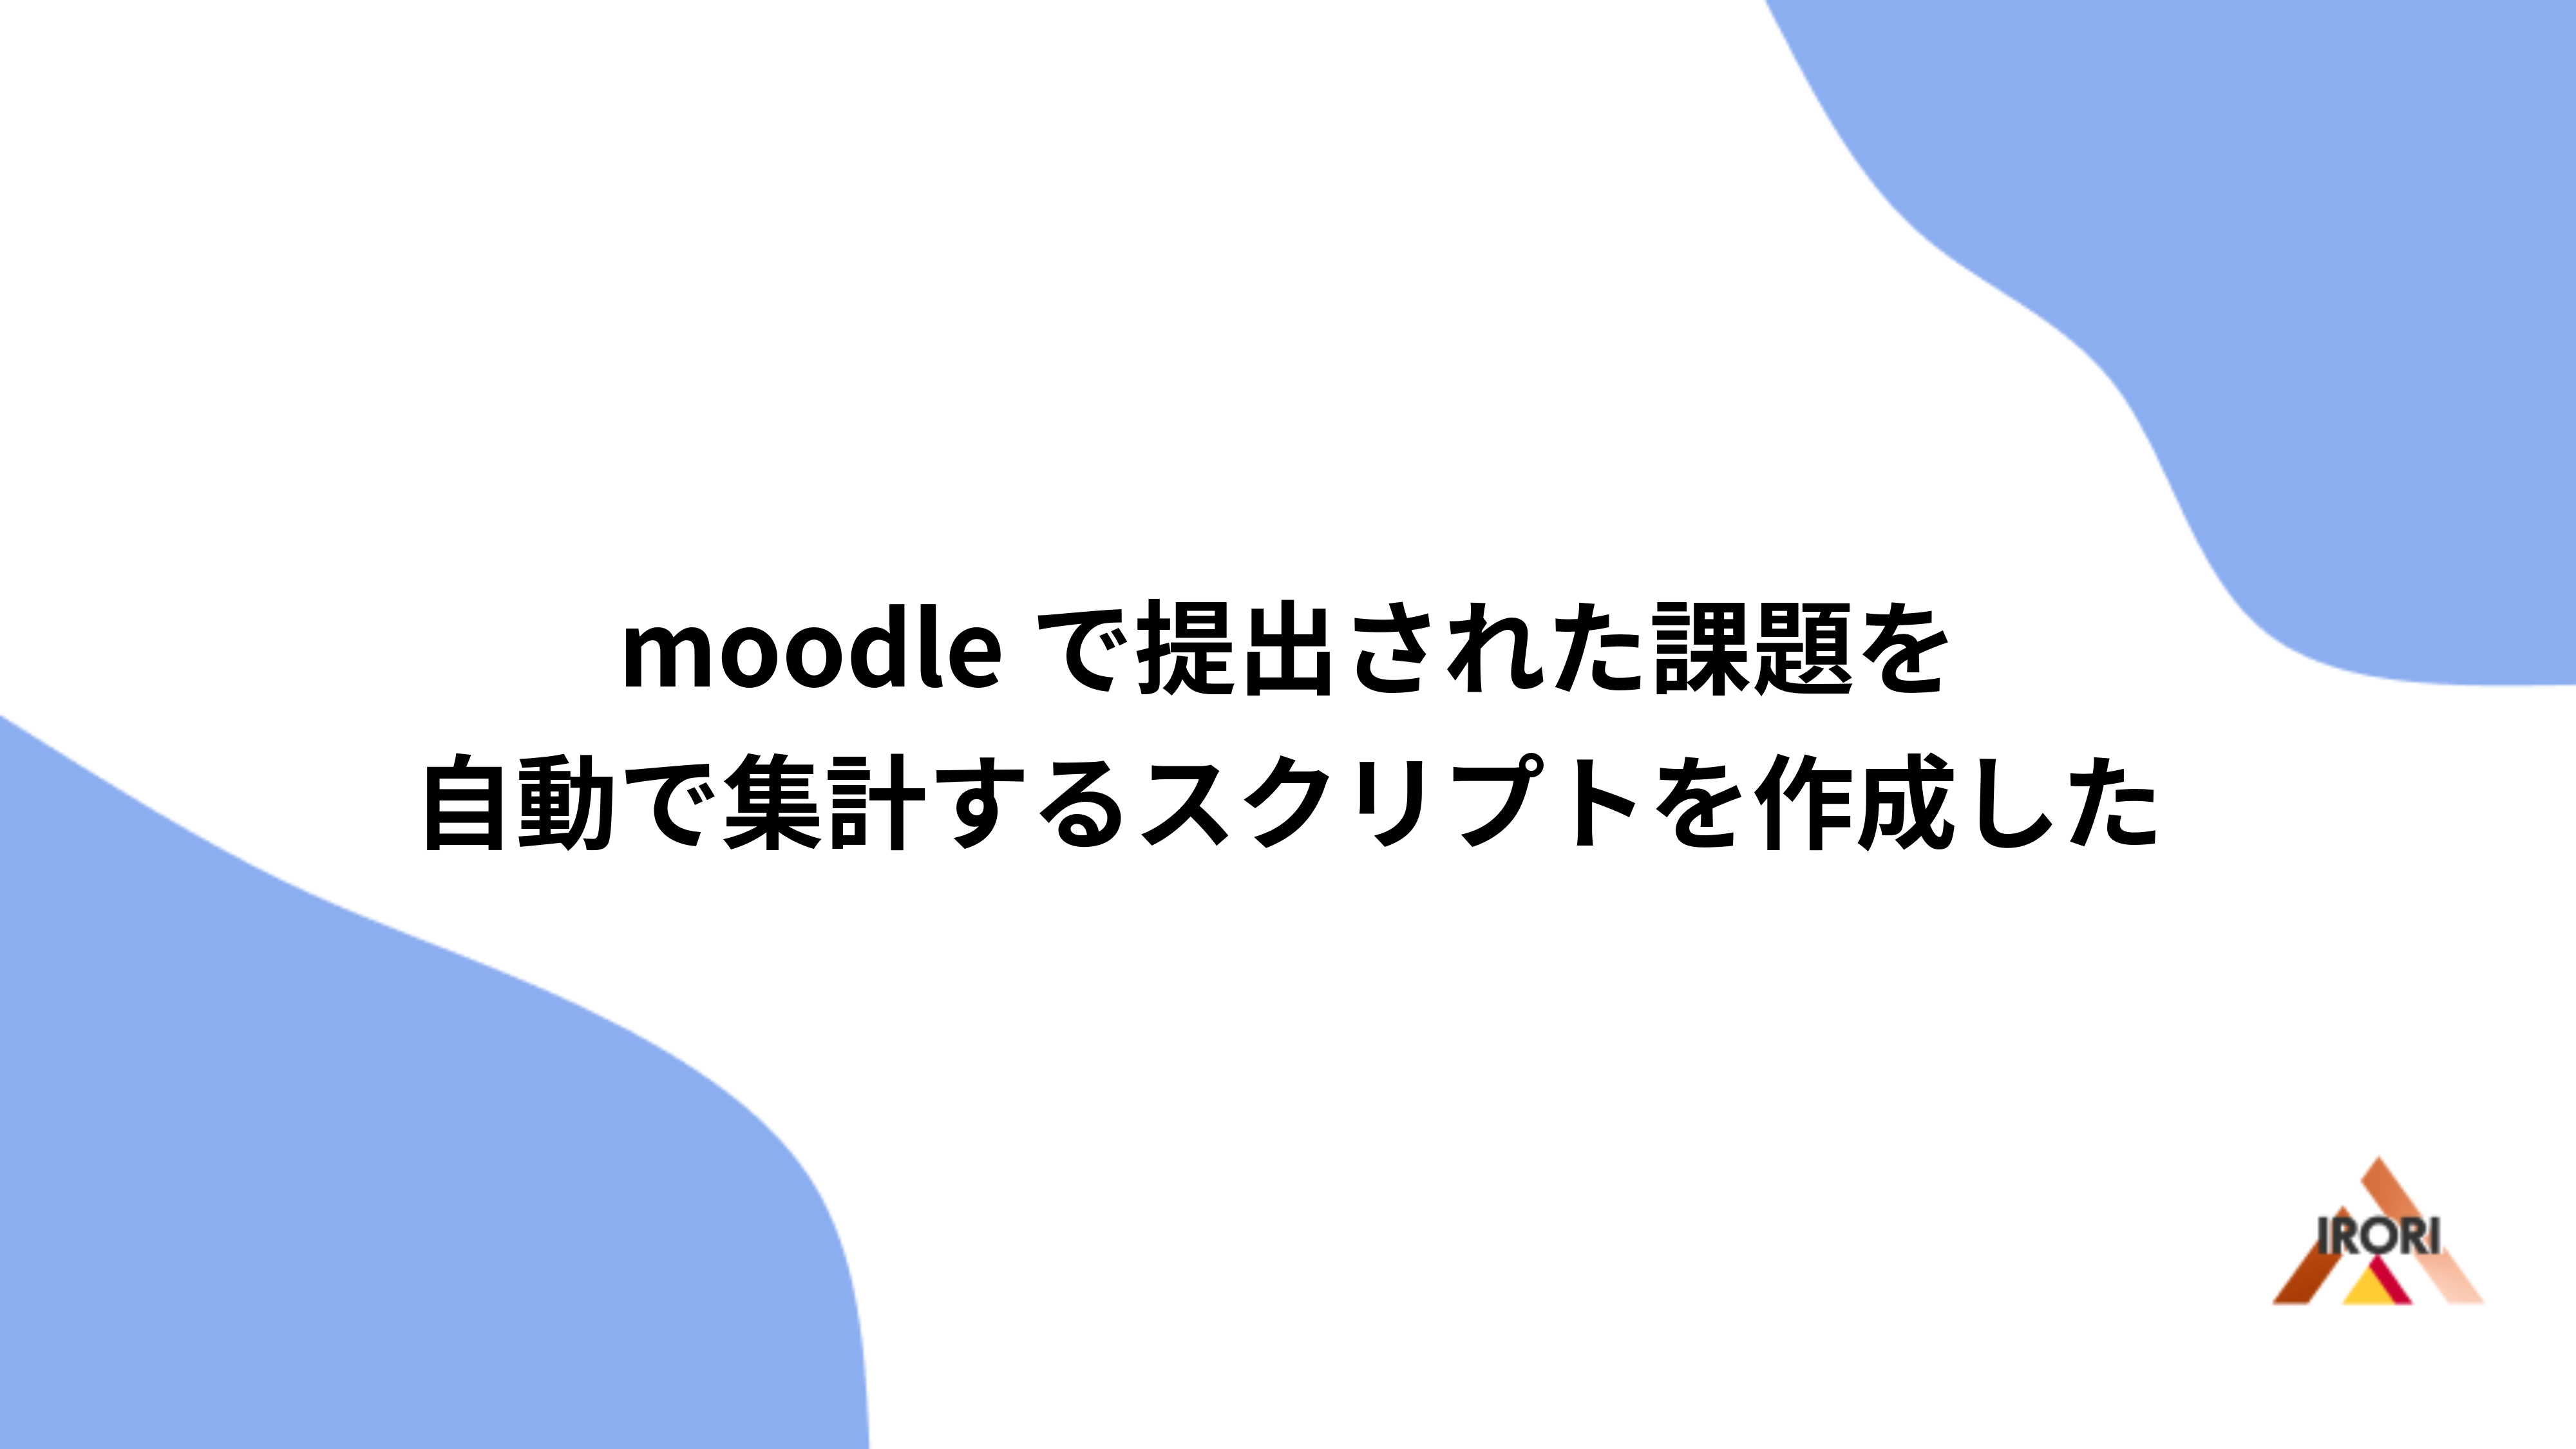 moodleで提出された課題を自動で集計するスクリプトを作成した